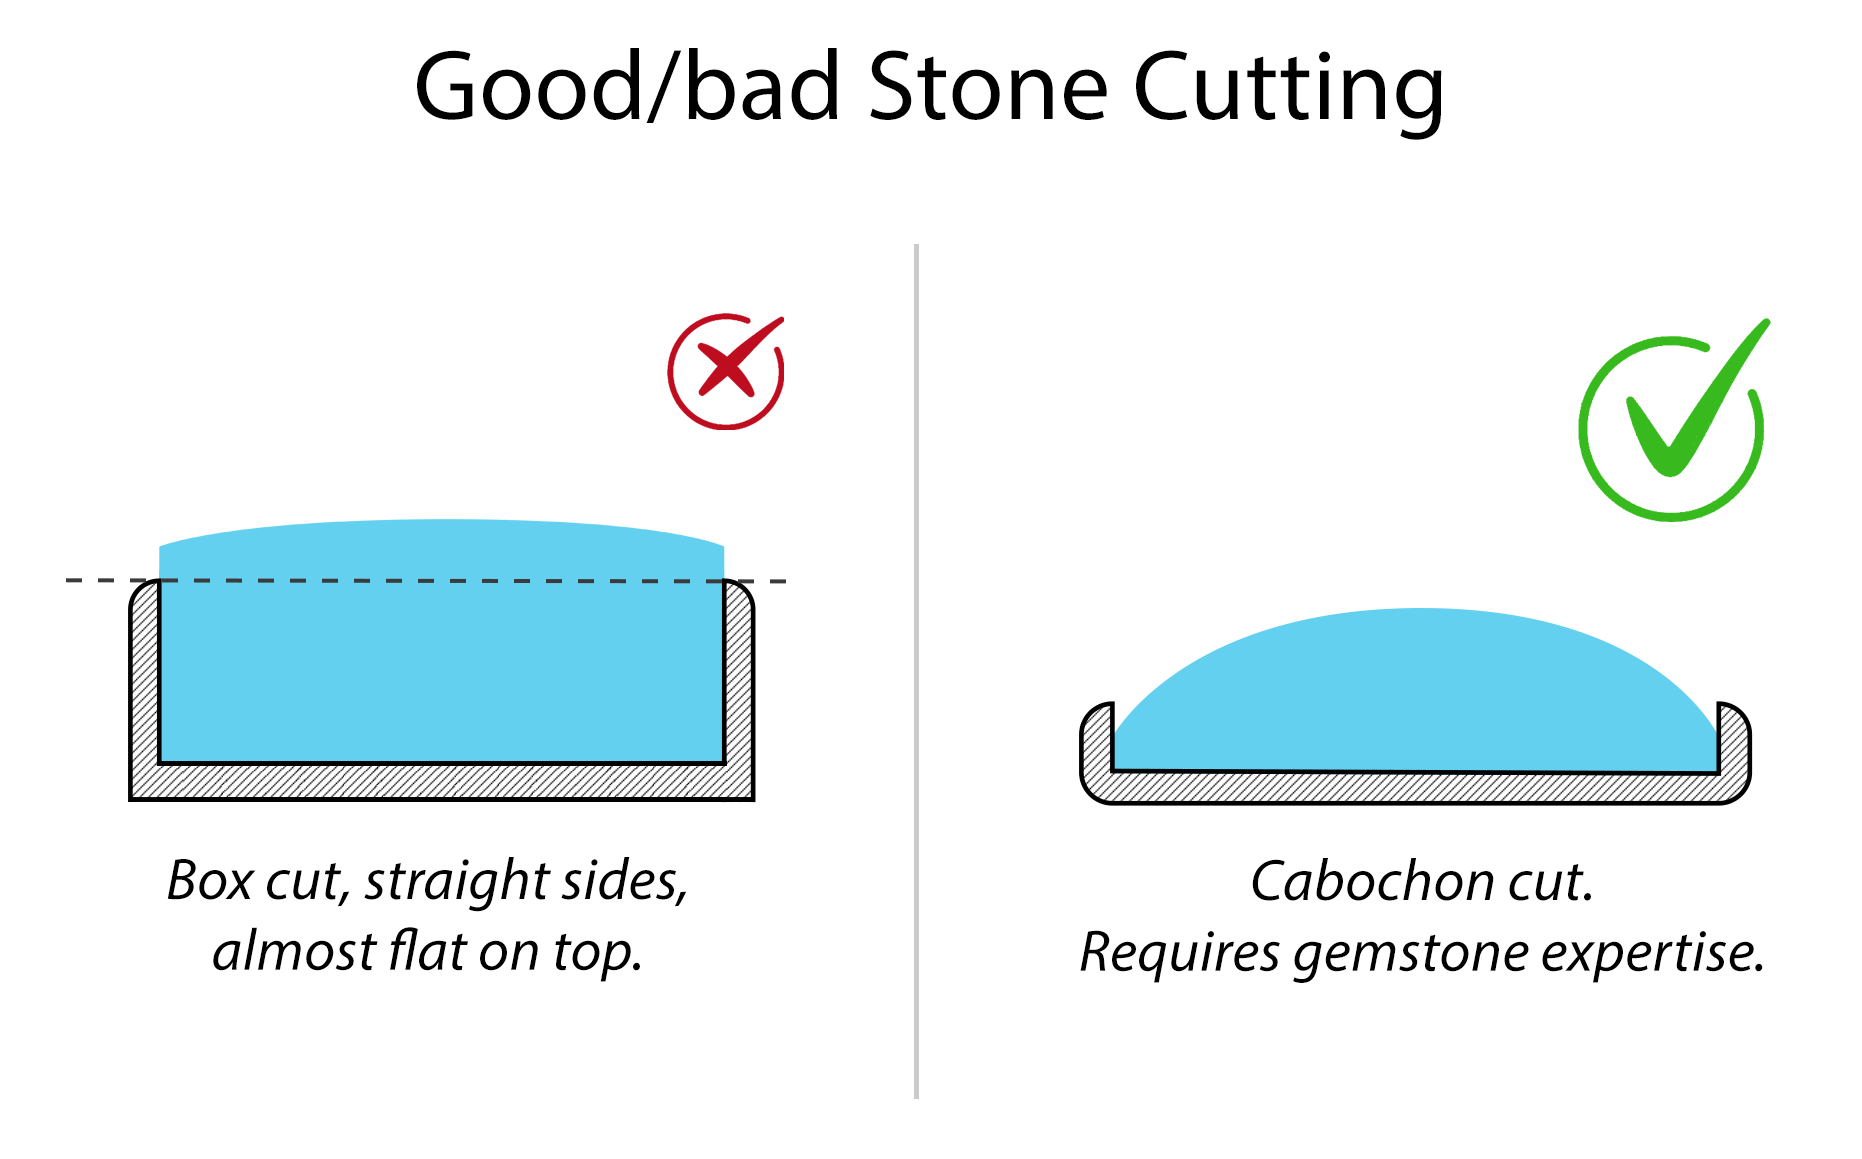 Good Cabochon Stone Cutting vs Bad Stone Cutting